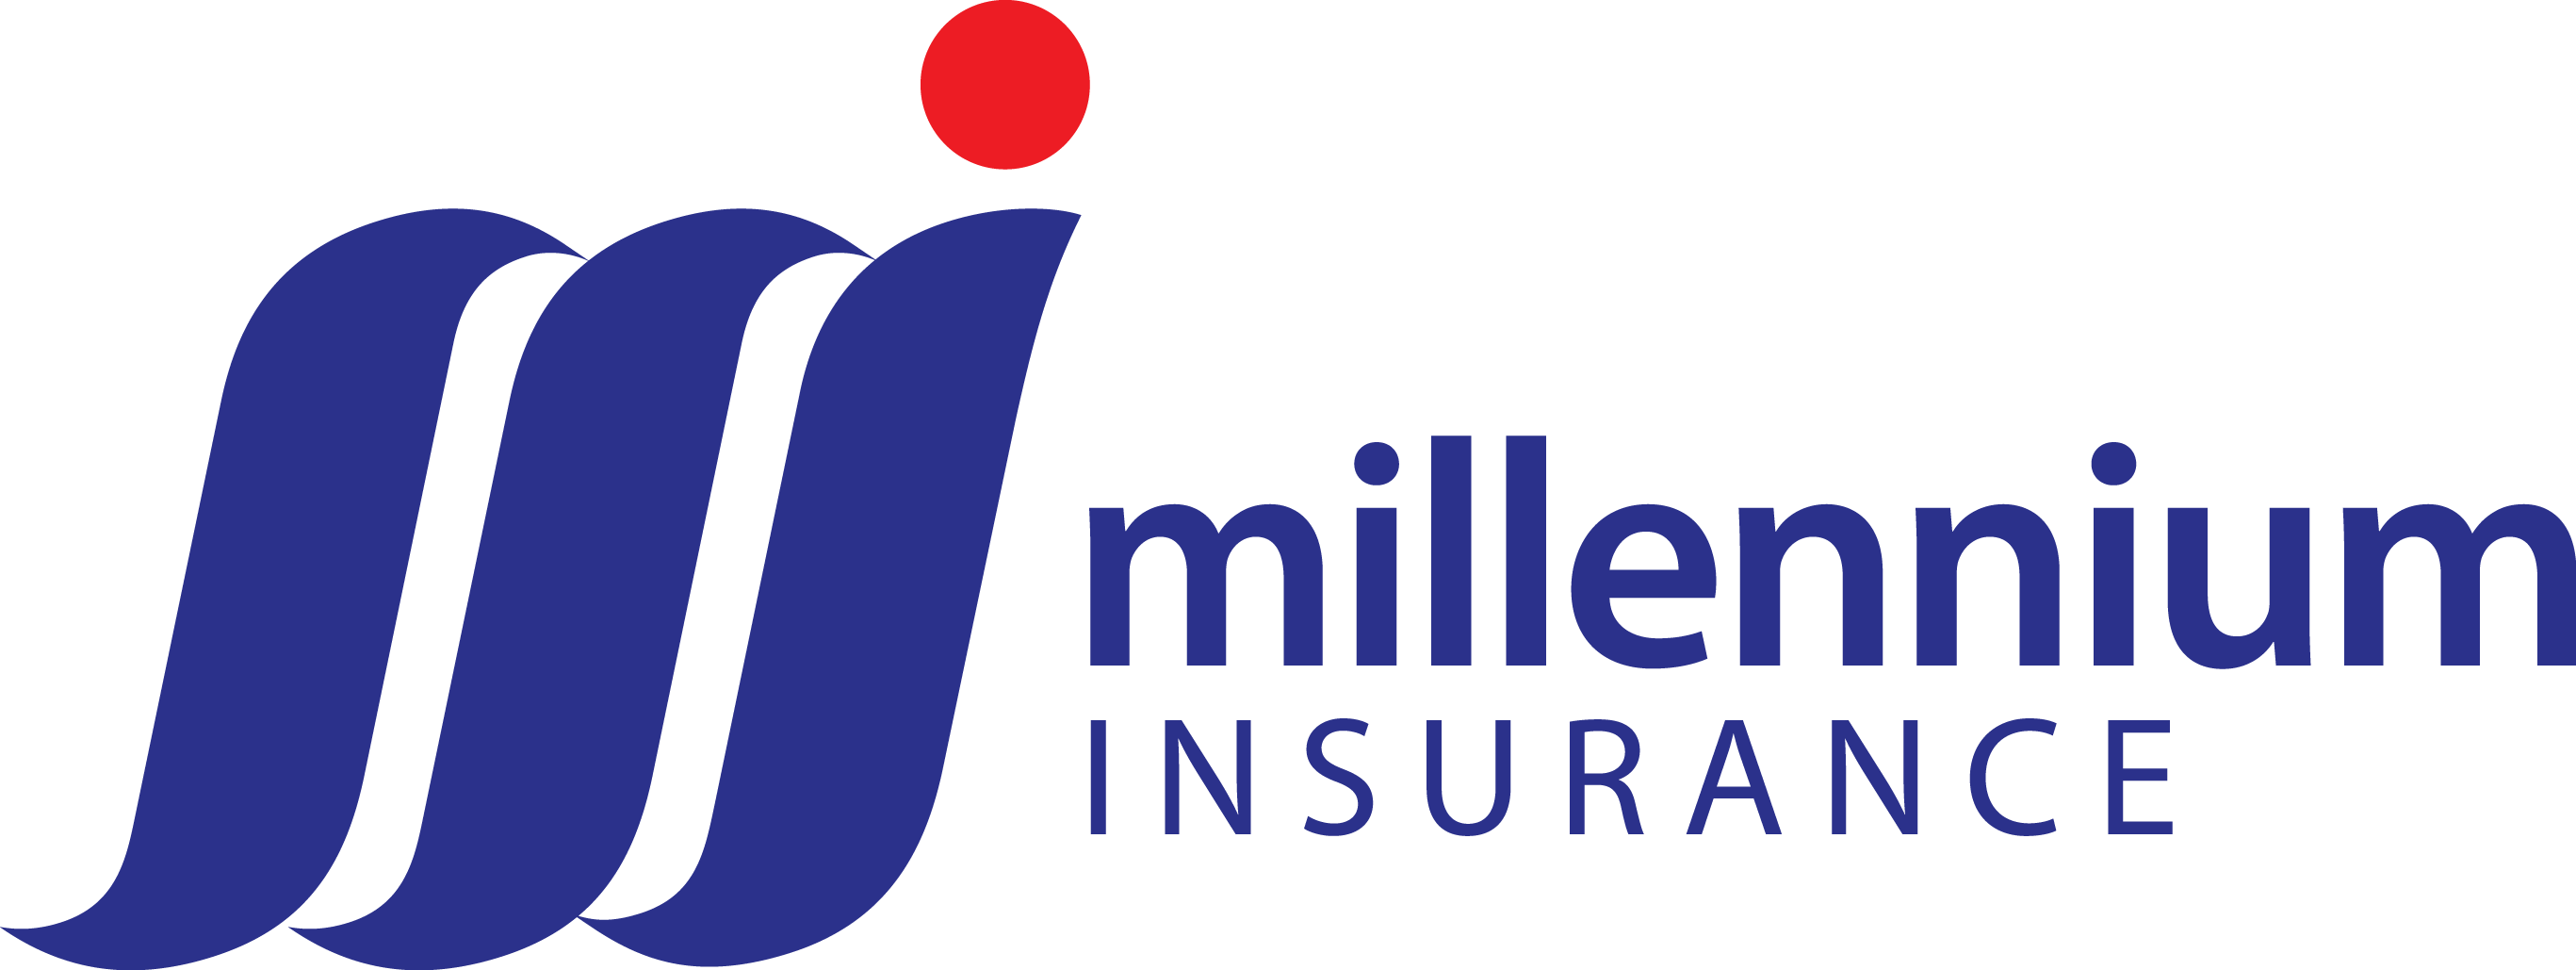 Millennium Insurance